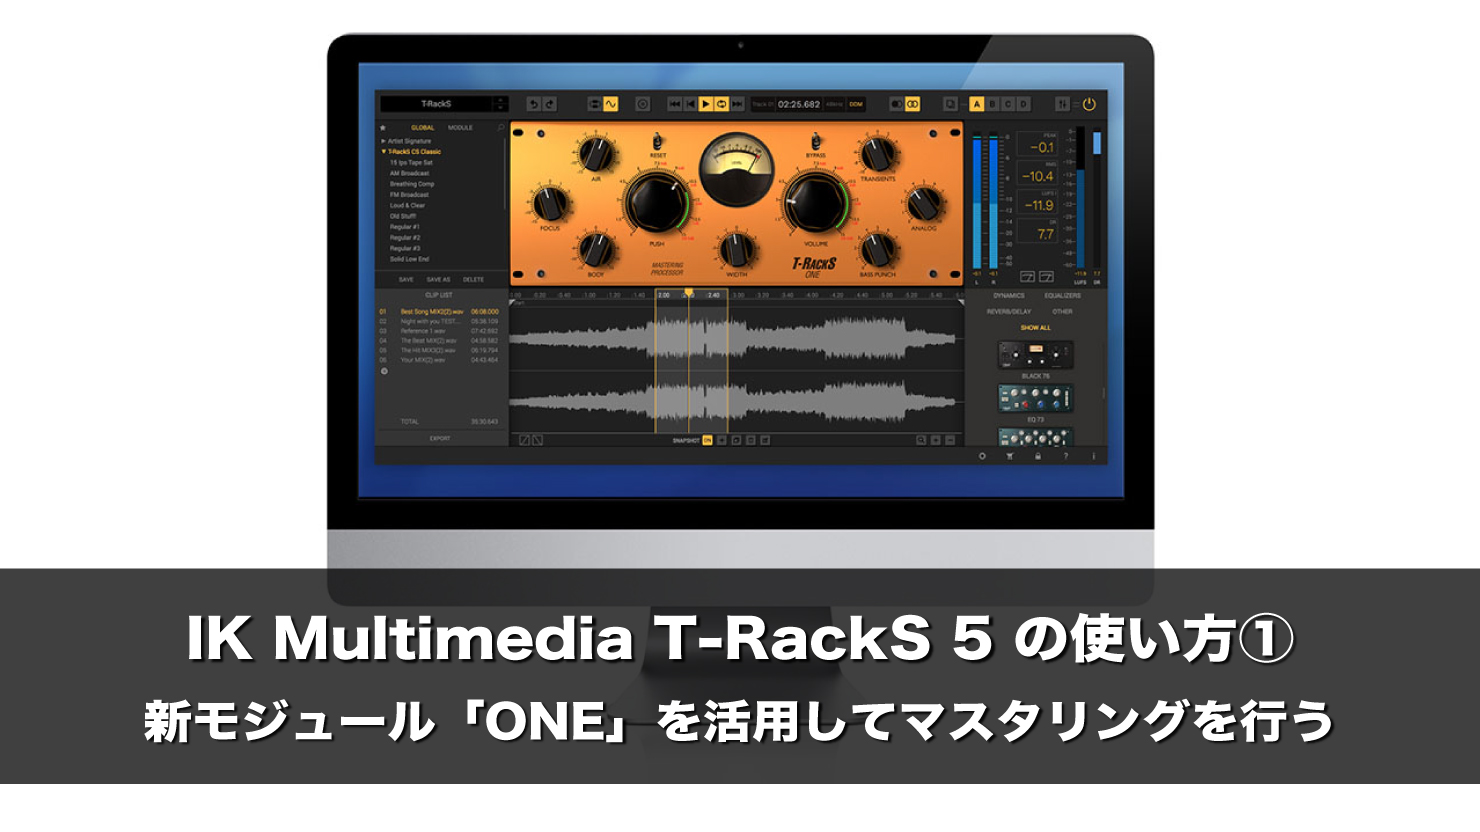 instal the new IK Multimedia T-RackS 5 Complete 5.10.3